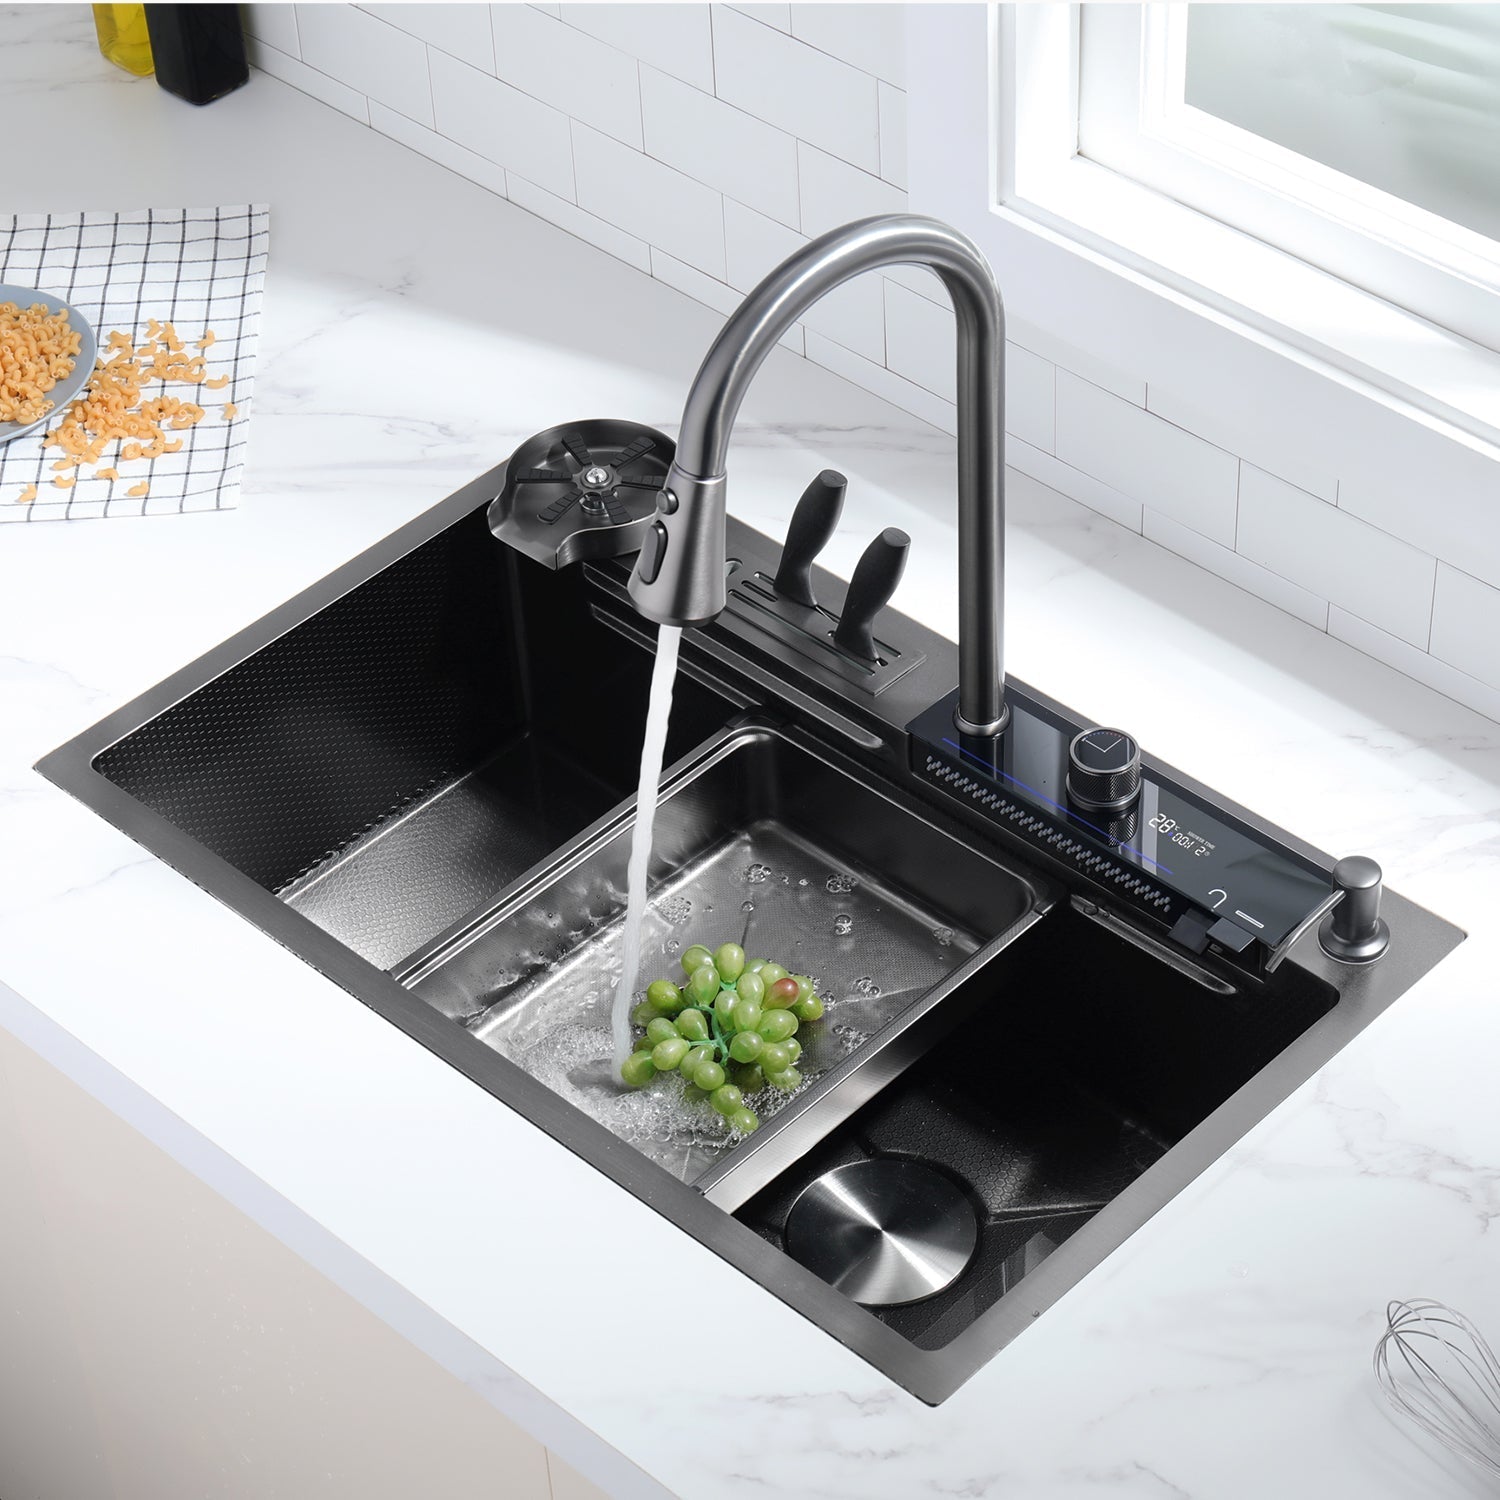 Lefton Waterfall Workstation Kitchen Sink Set Digital Temperature Display & LED Lighting - KS2205L - Kitchen Sinks - Lefton Home